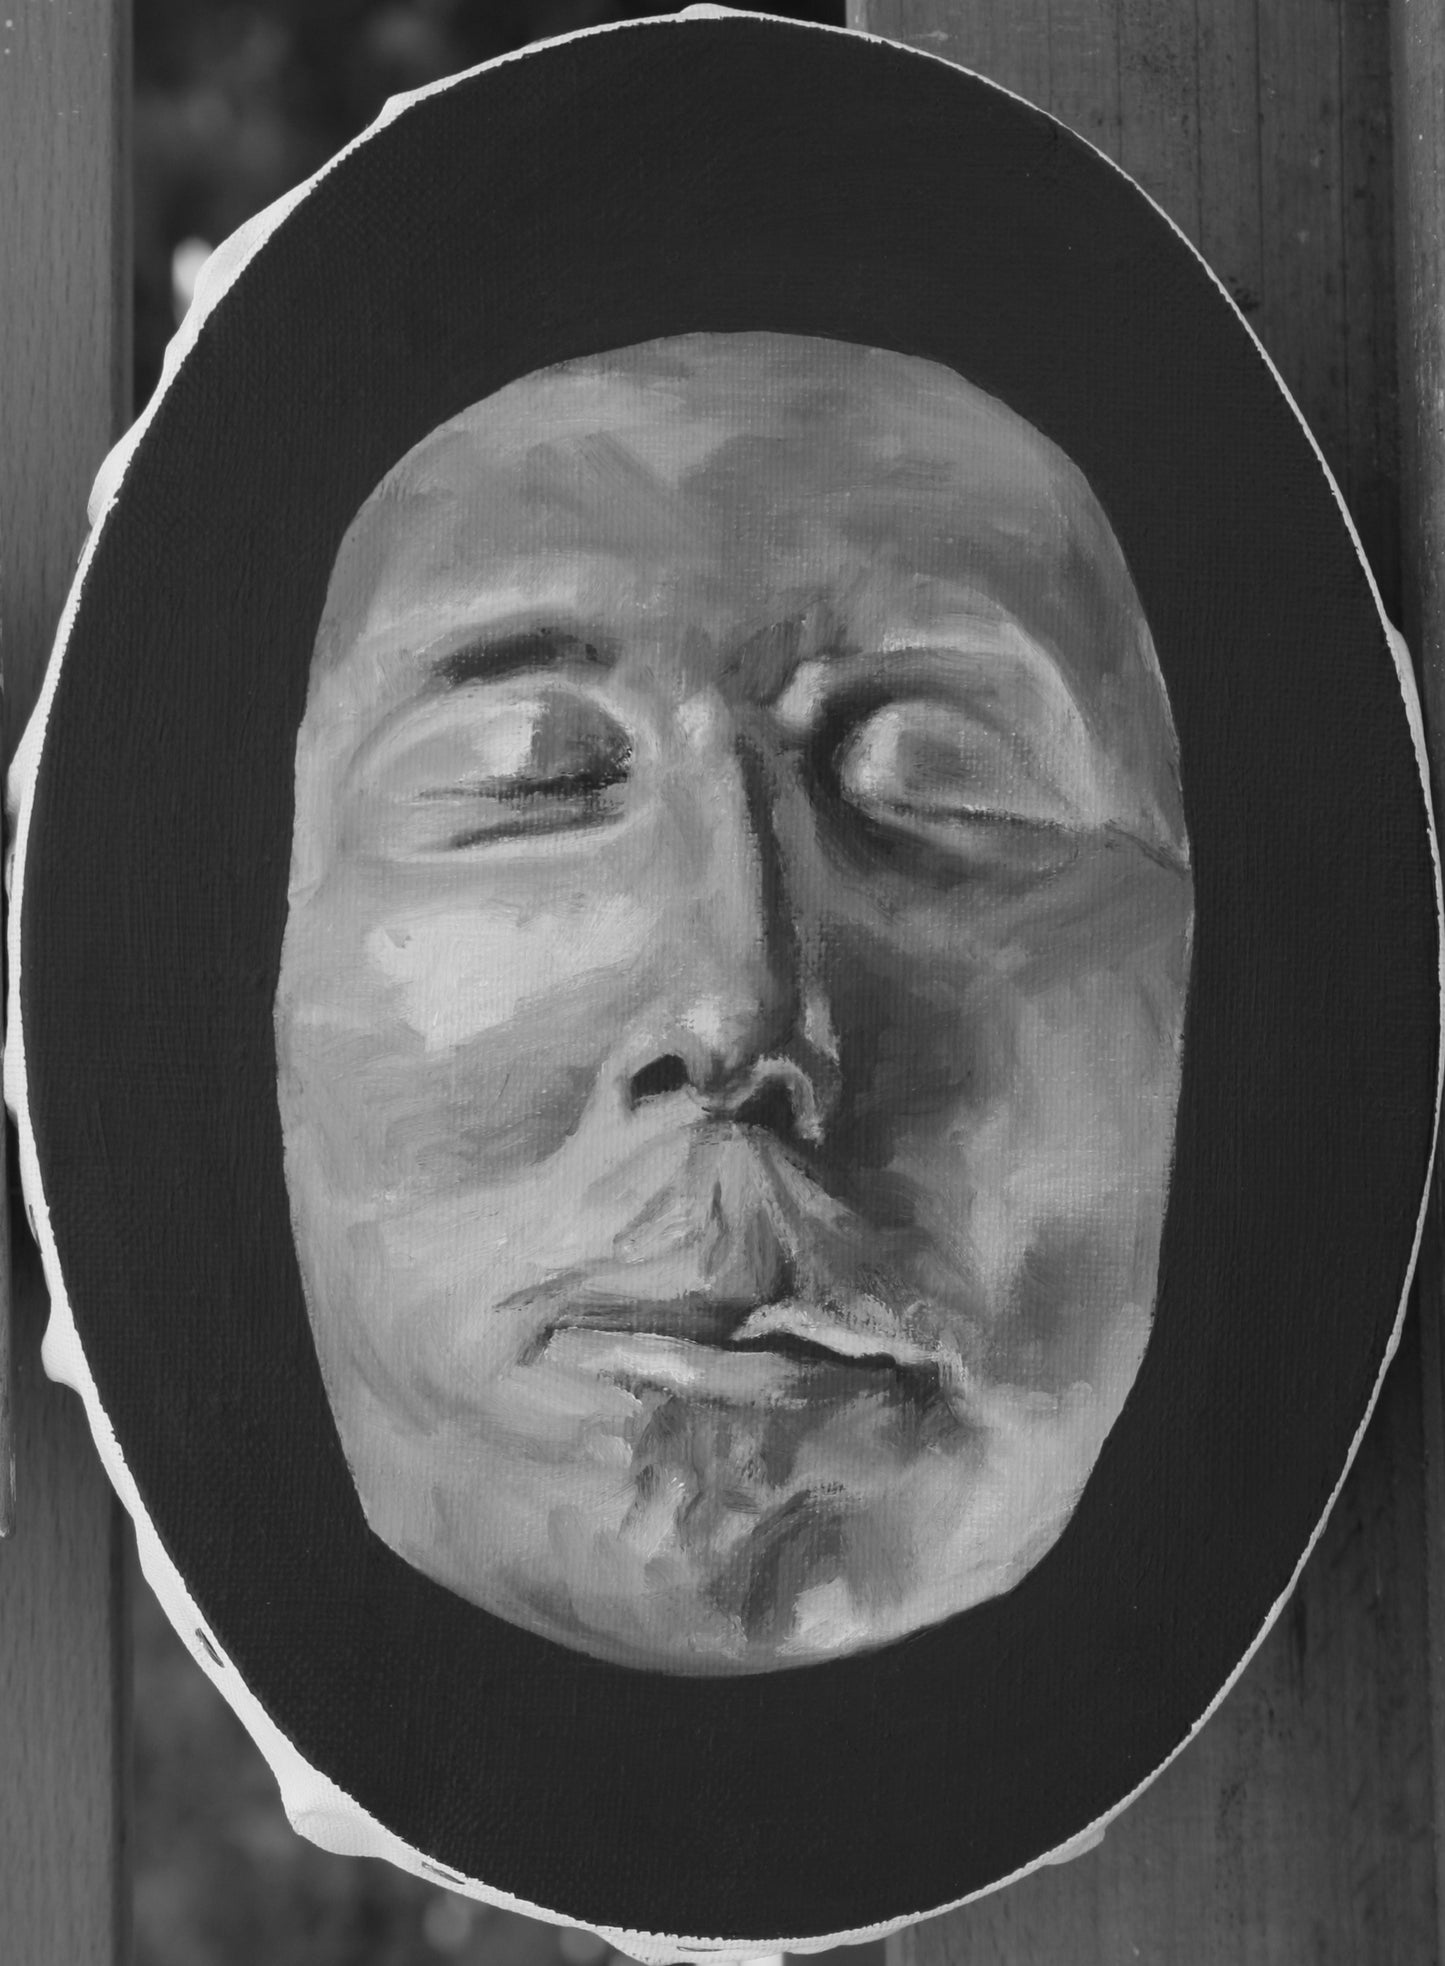 Deathmask of Oliver Cromwell (2004)